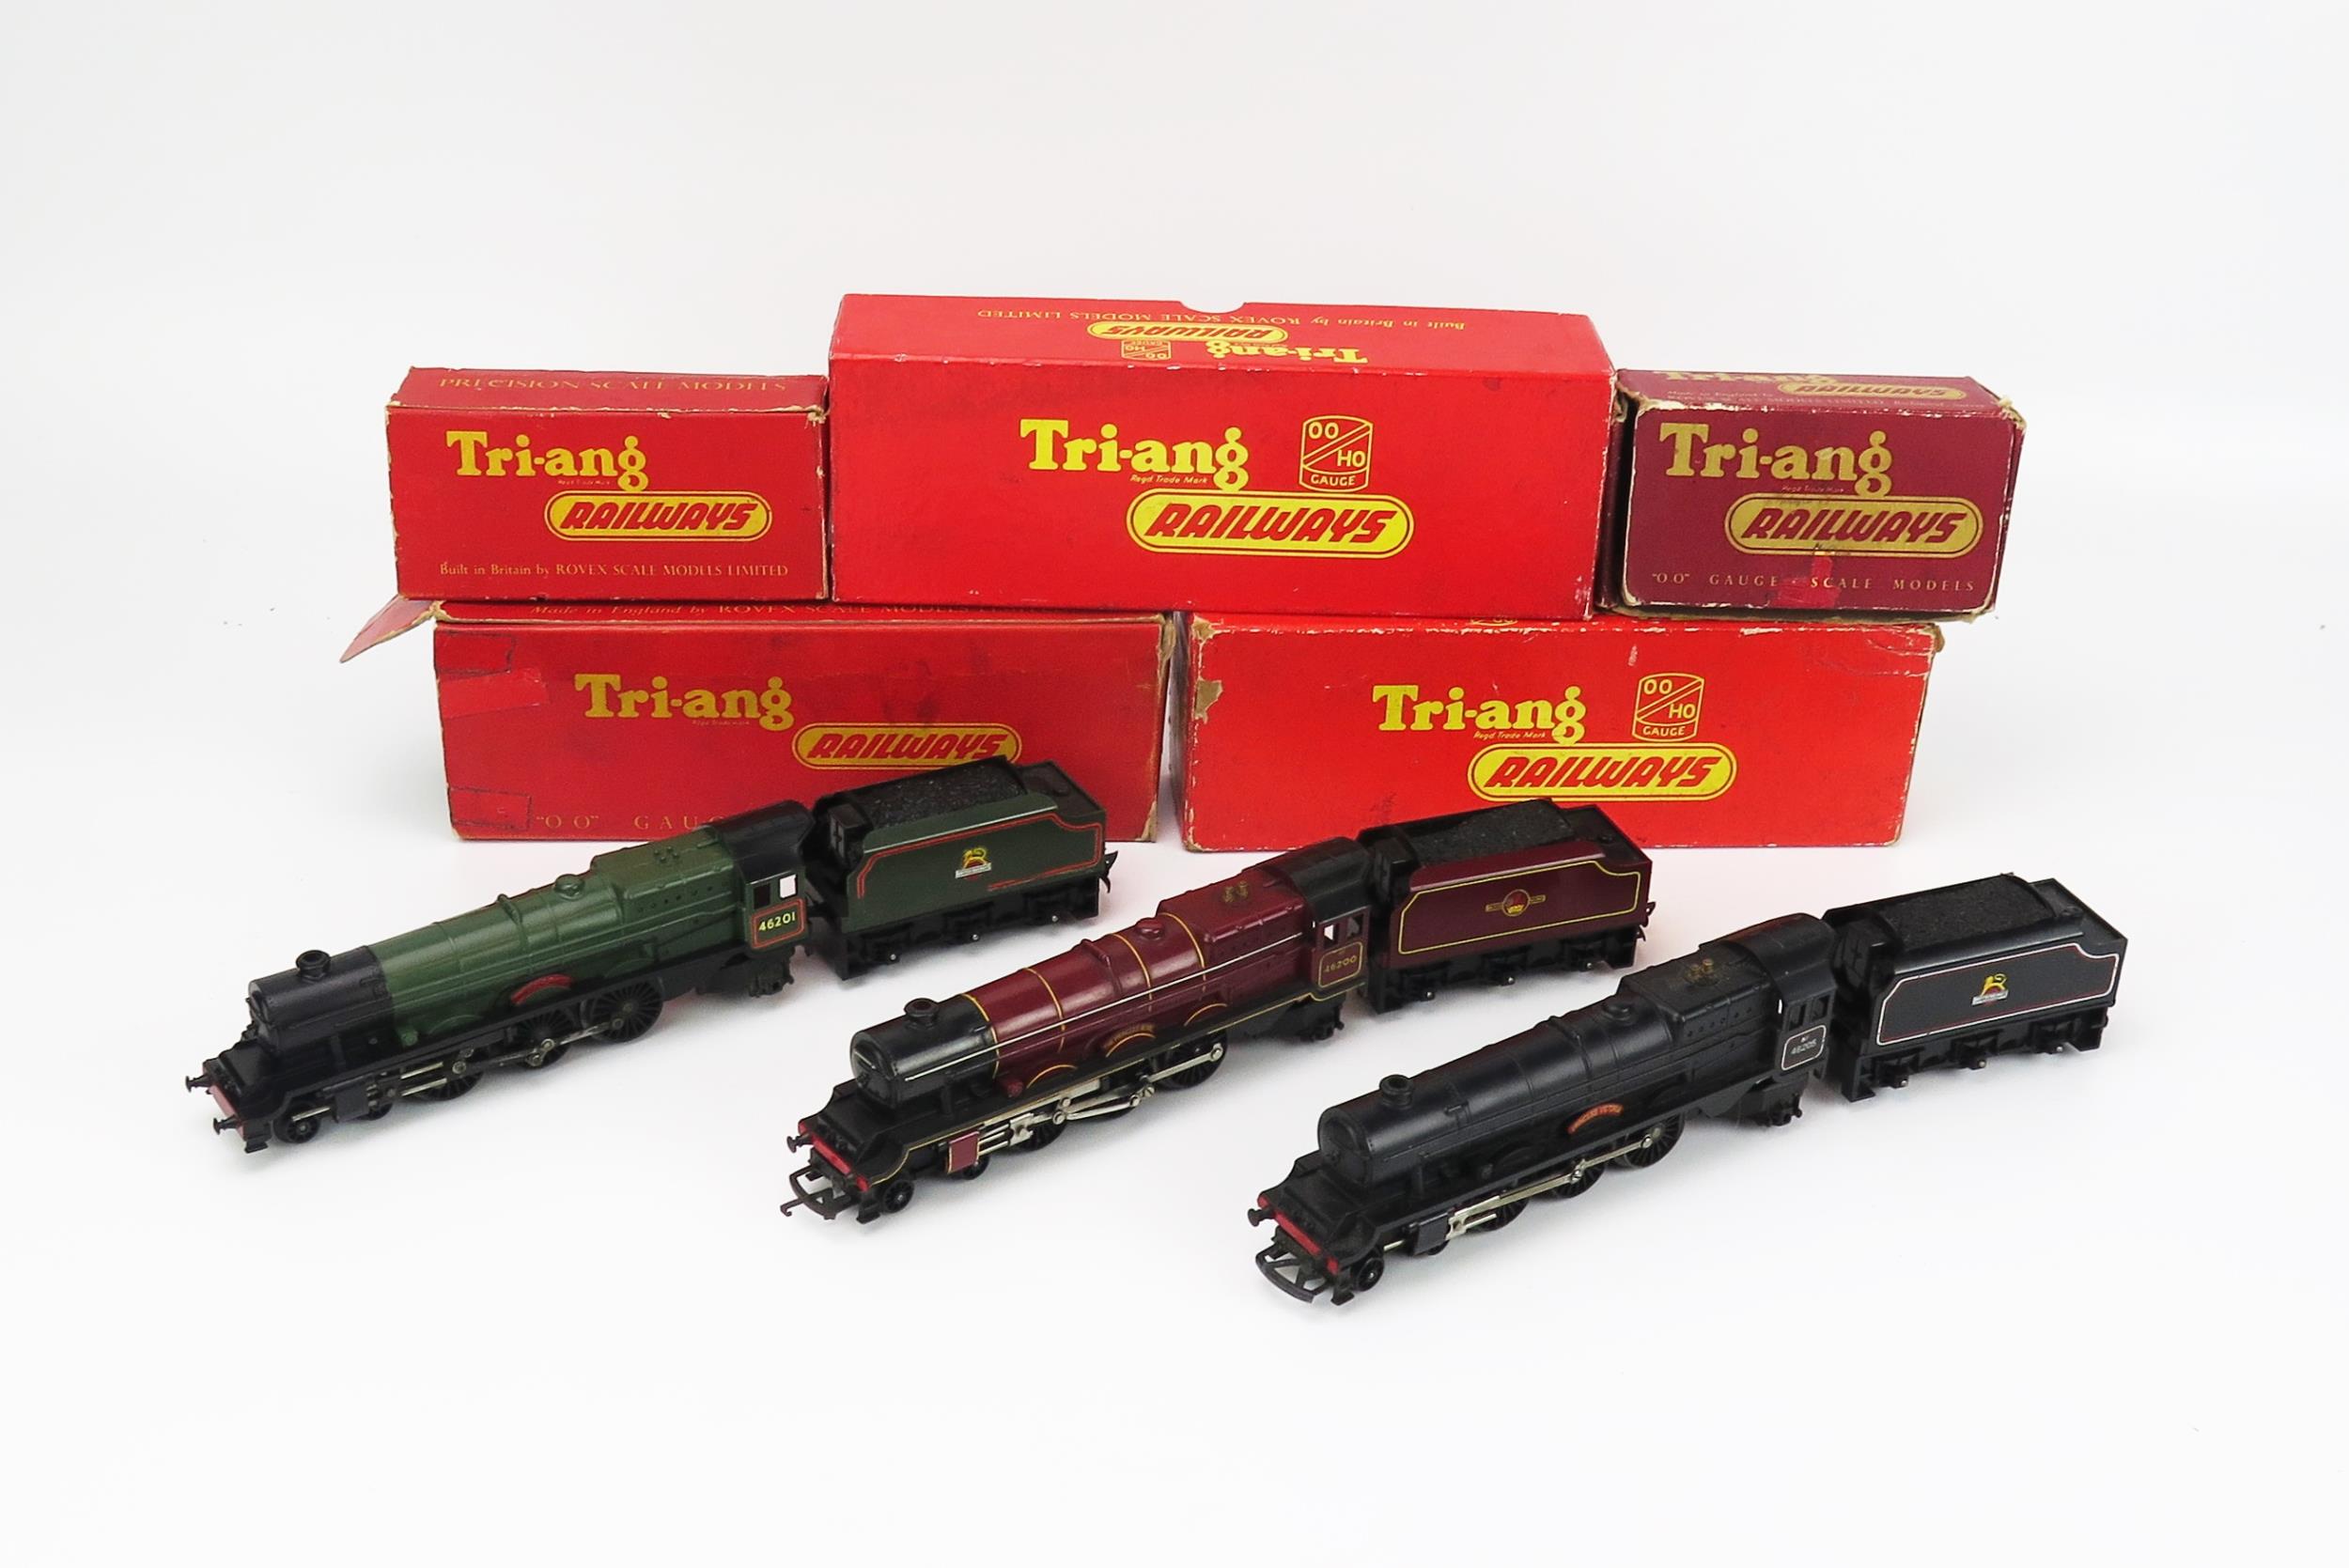 Triang Railways OO Gauge 4-6-2 Princess Class Locomotive and Tender trio - (1) R50 "Princess